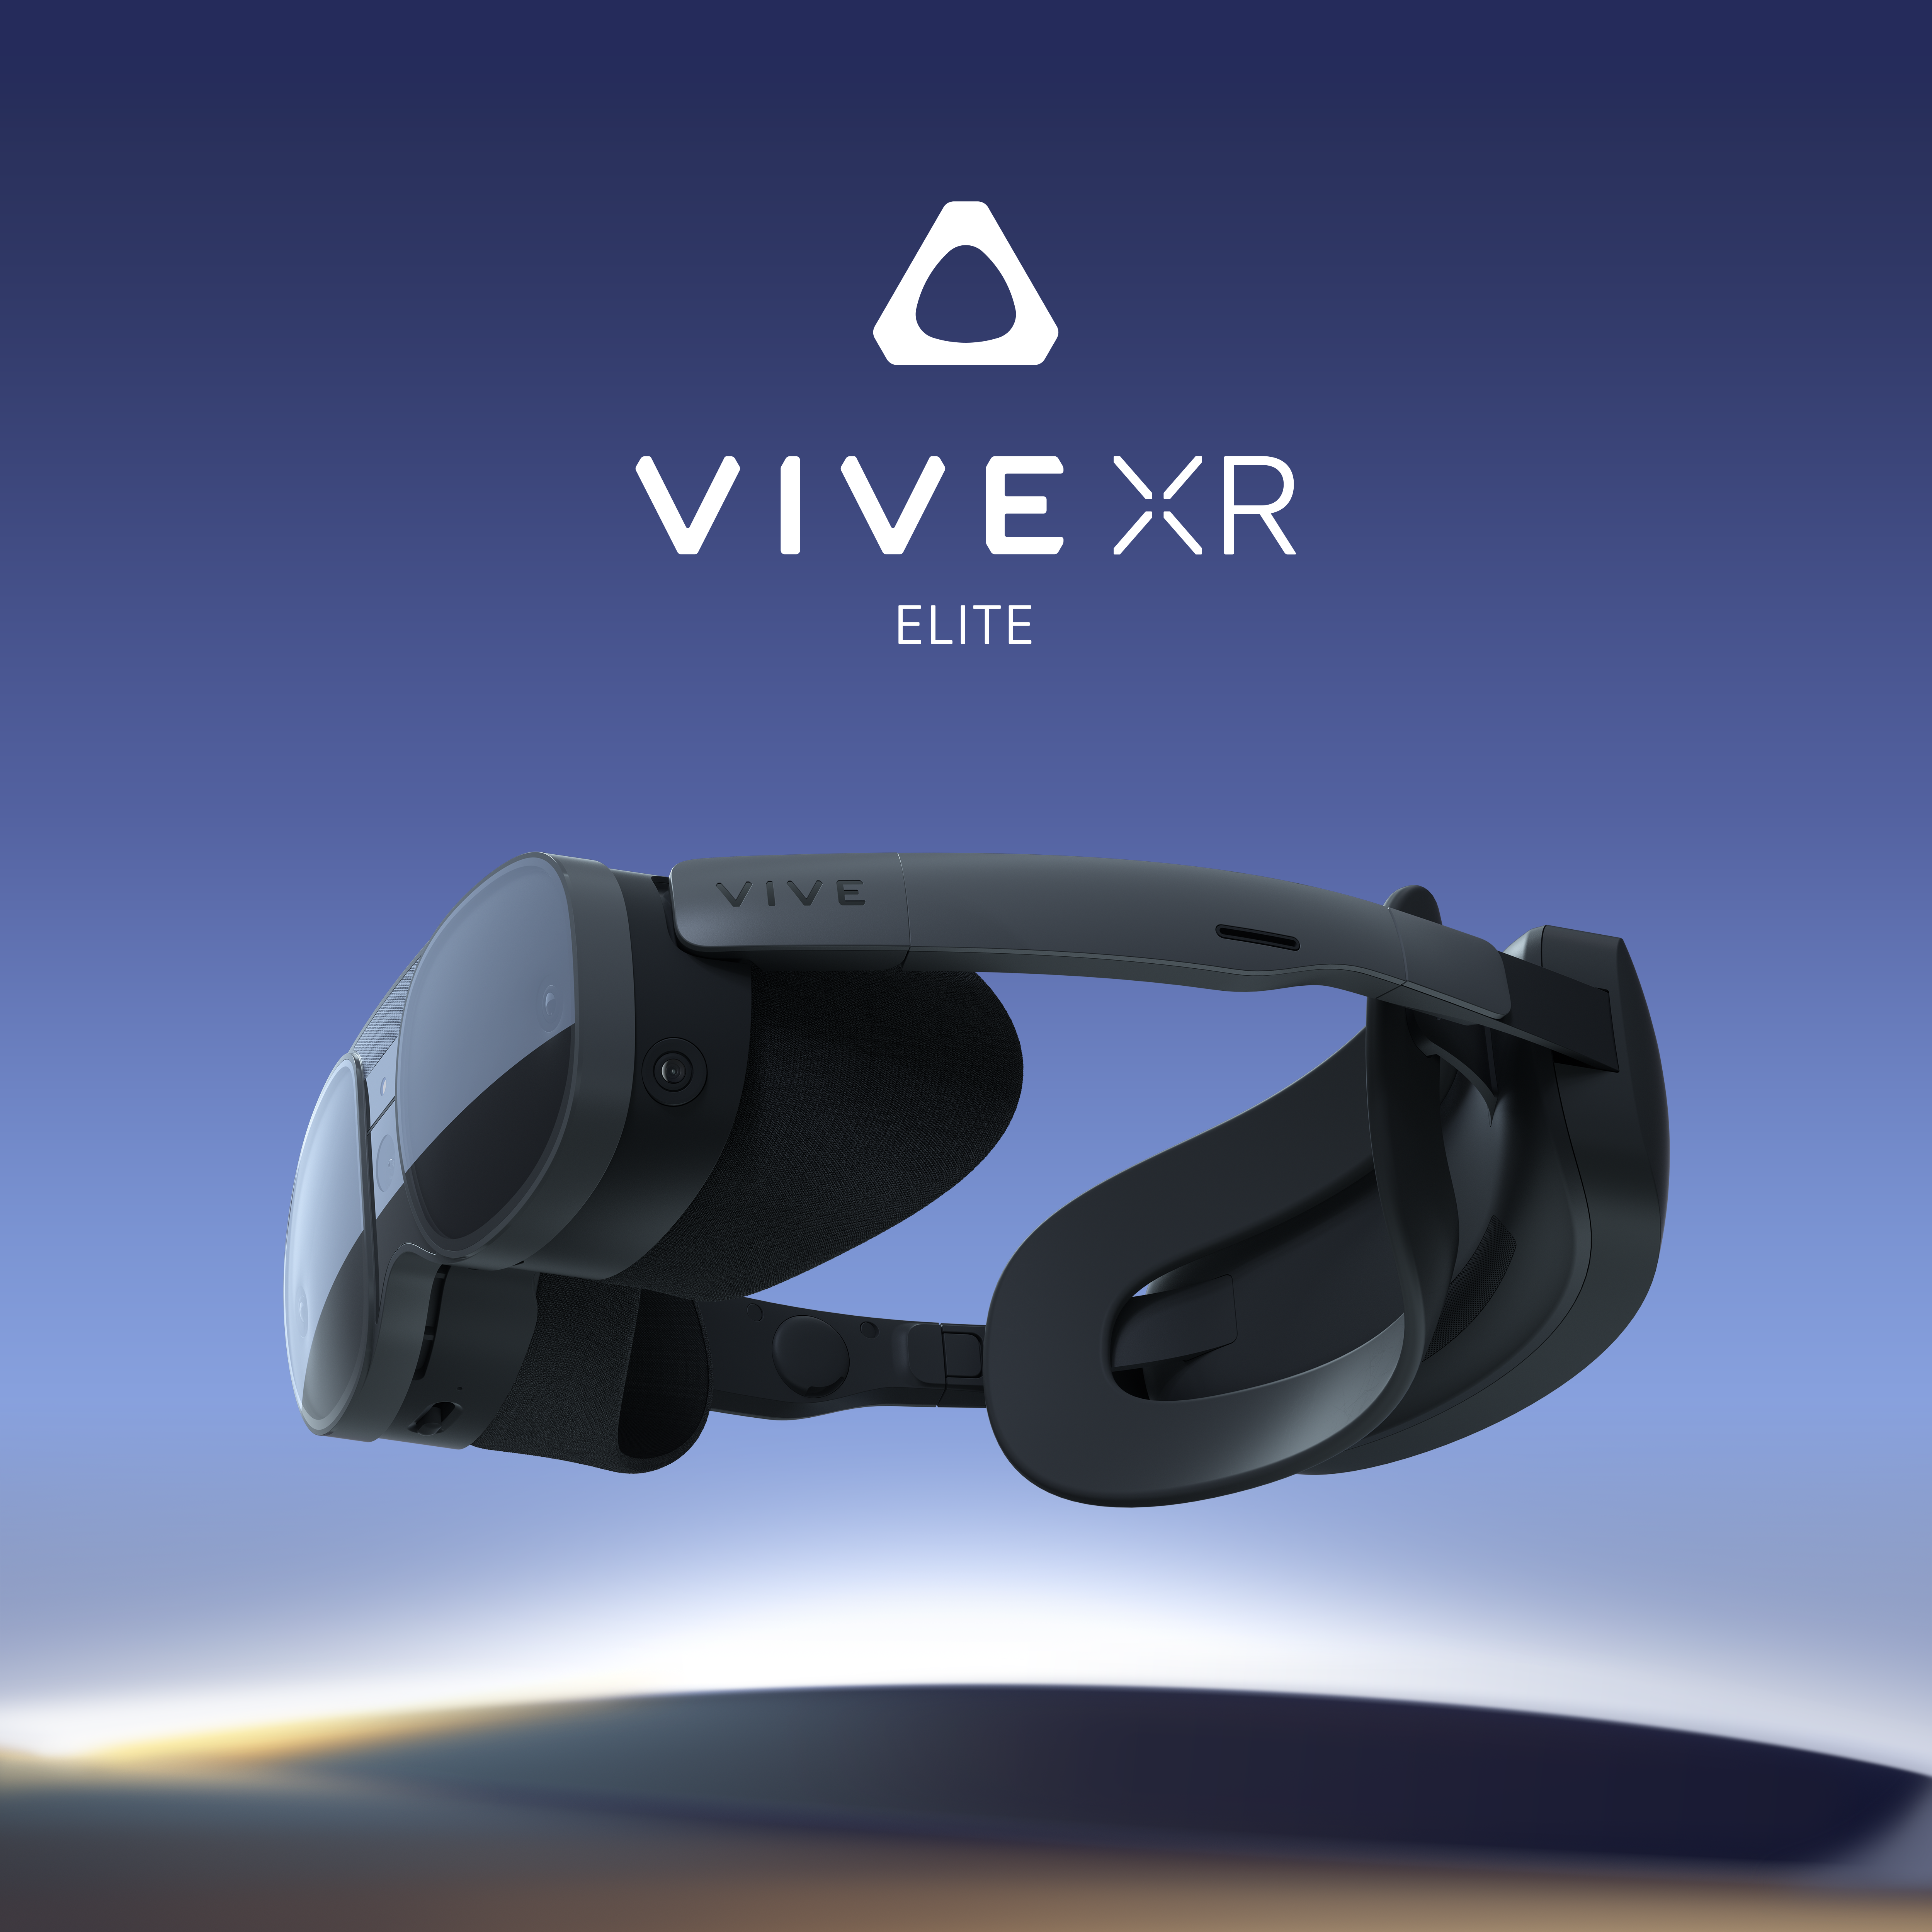 Forløber heltinde Validering Introducing the powerful and versatile VIVE XR Elite | VIVE Blog